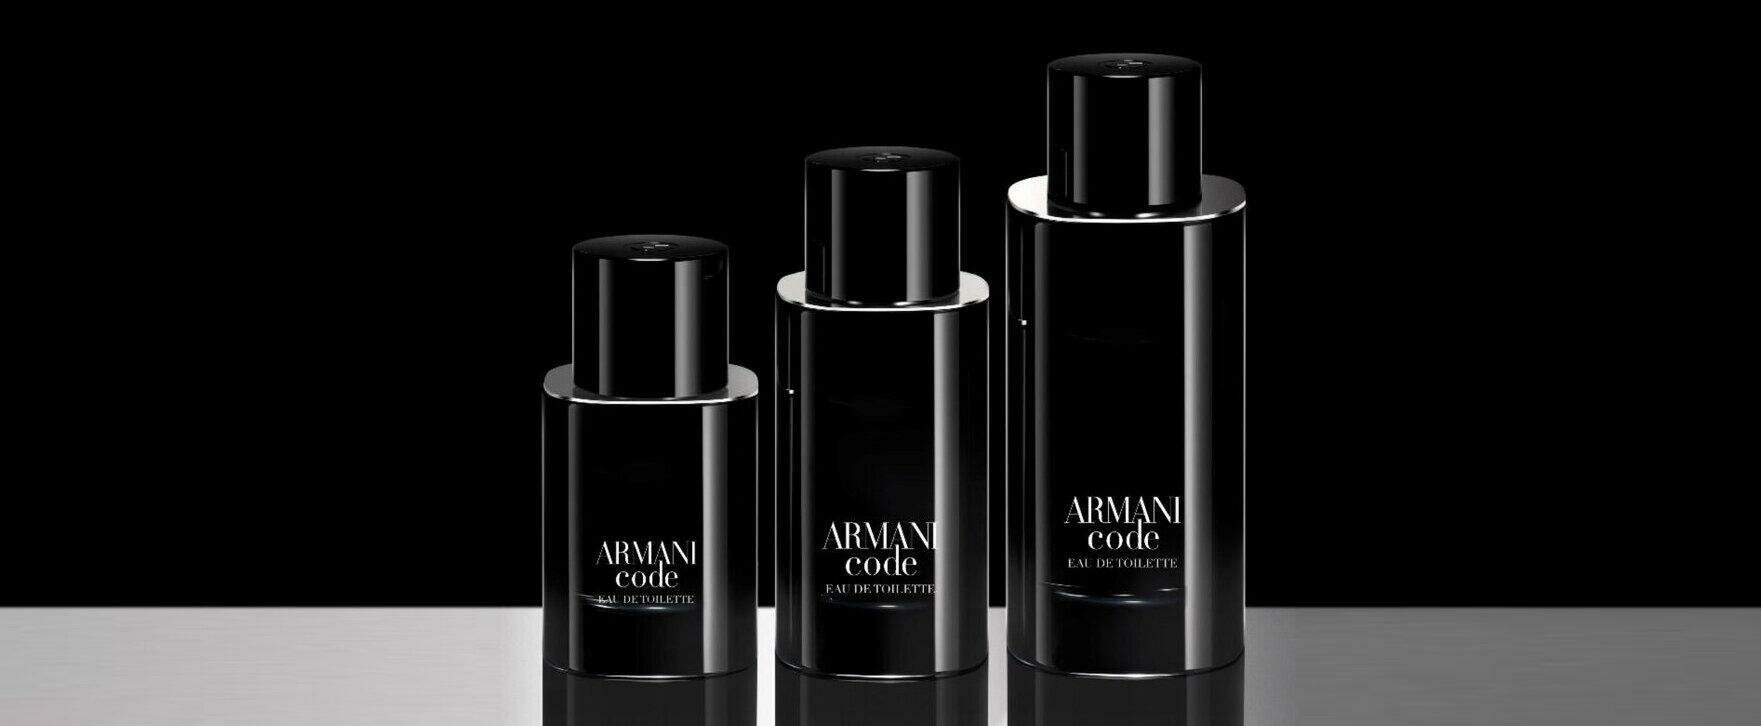 “Armani Code Eau de Toilette” - The New Contrasting Creation of the “Armani Code” Series